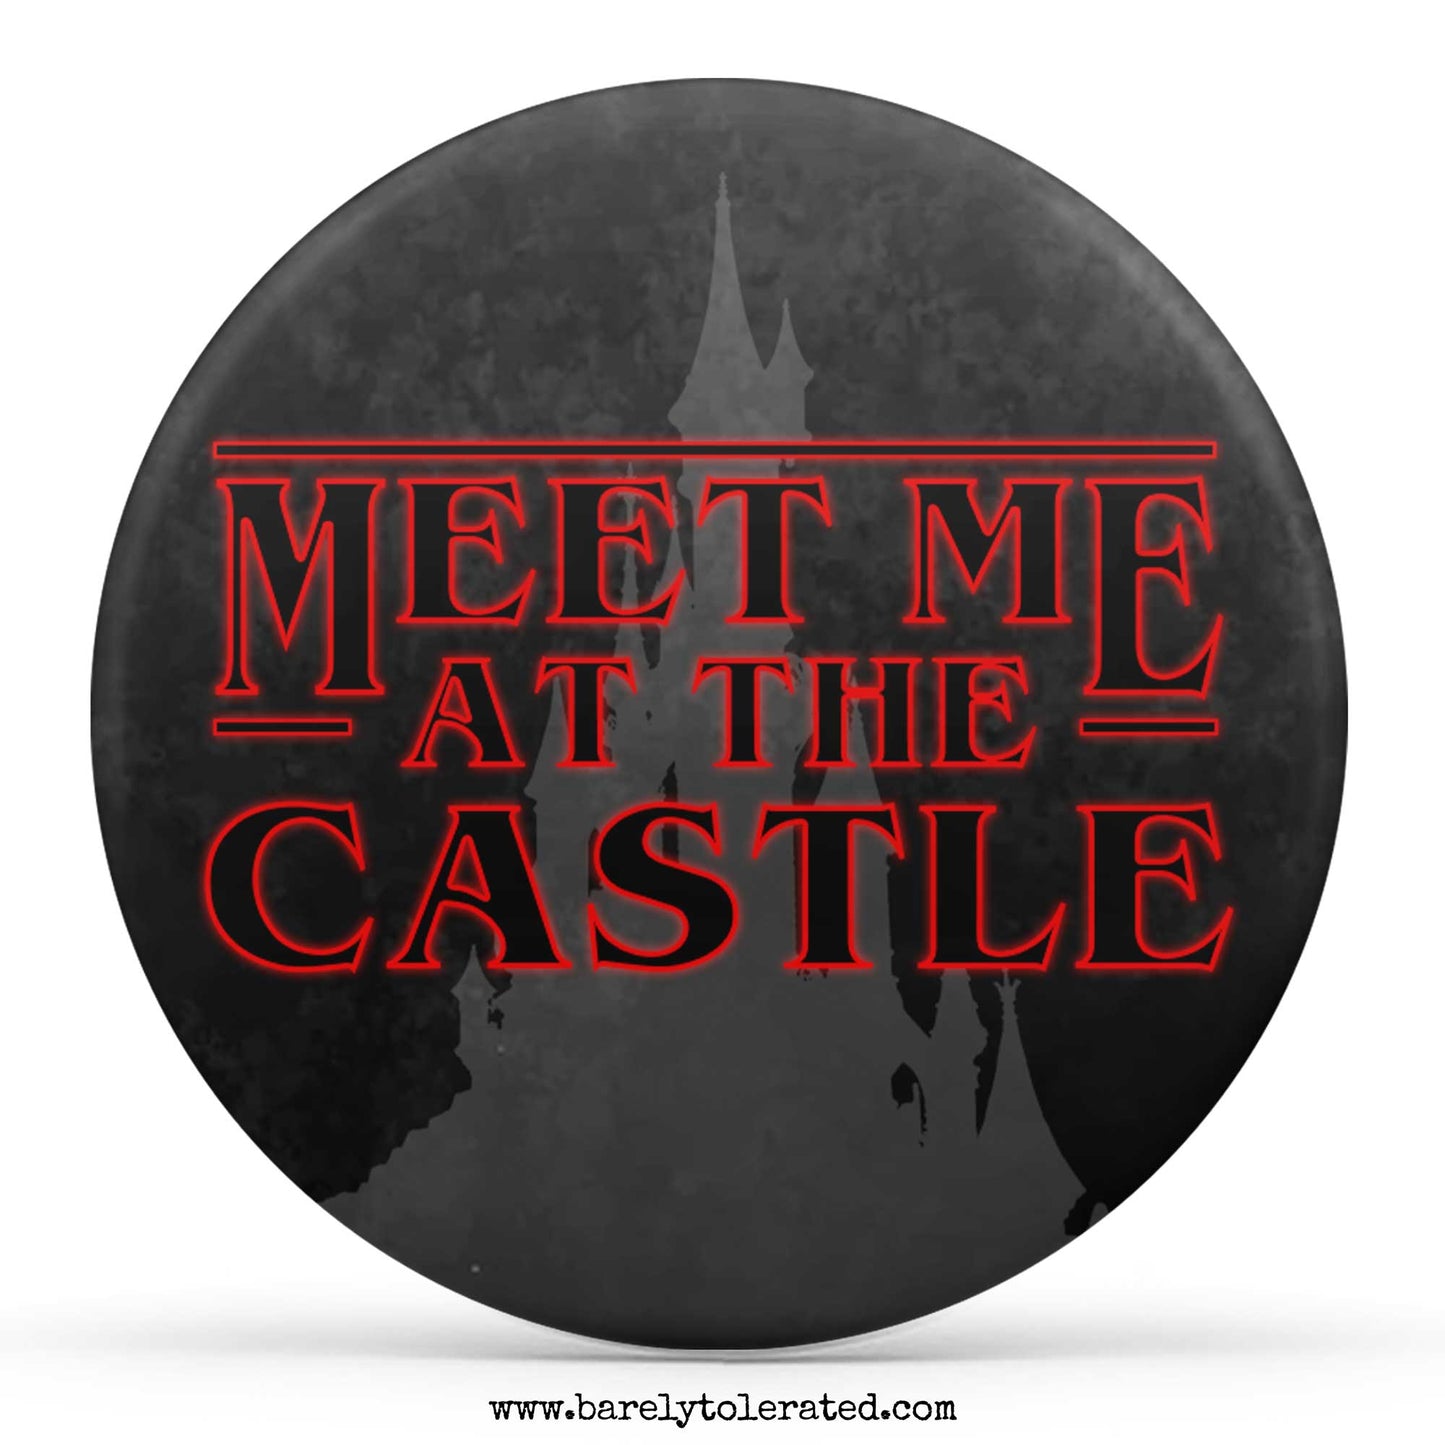 Meet Me At The Castle